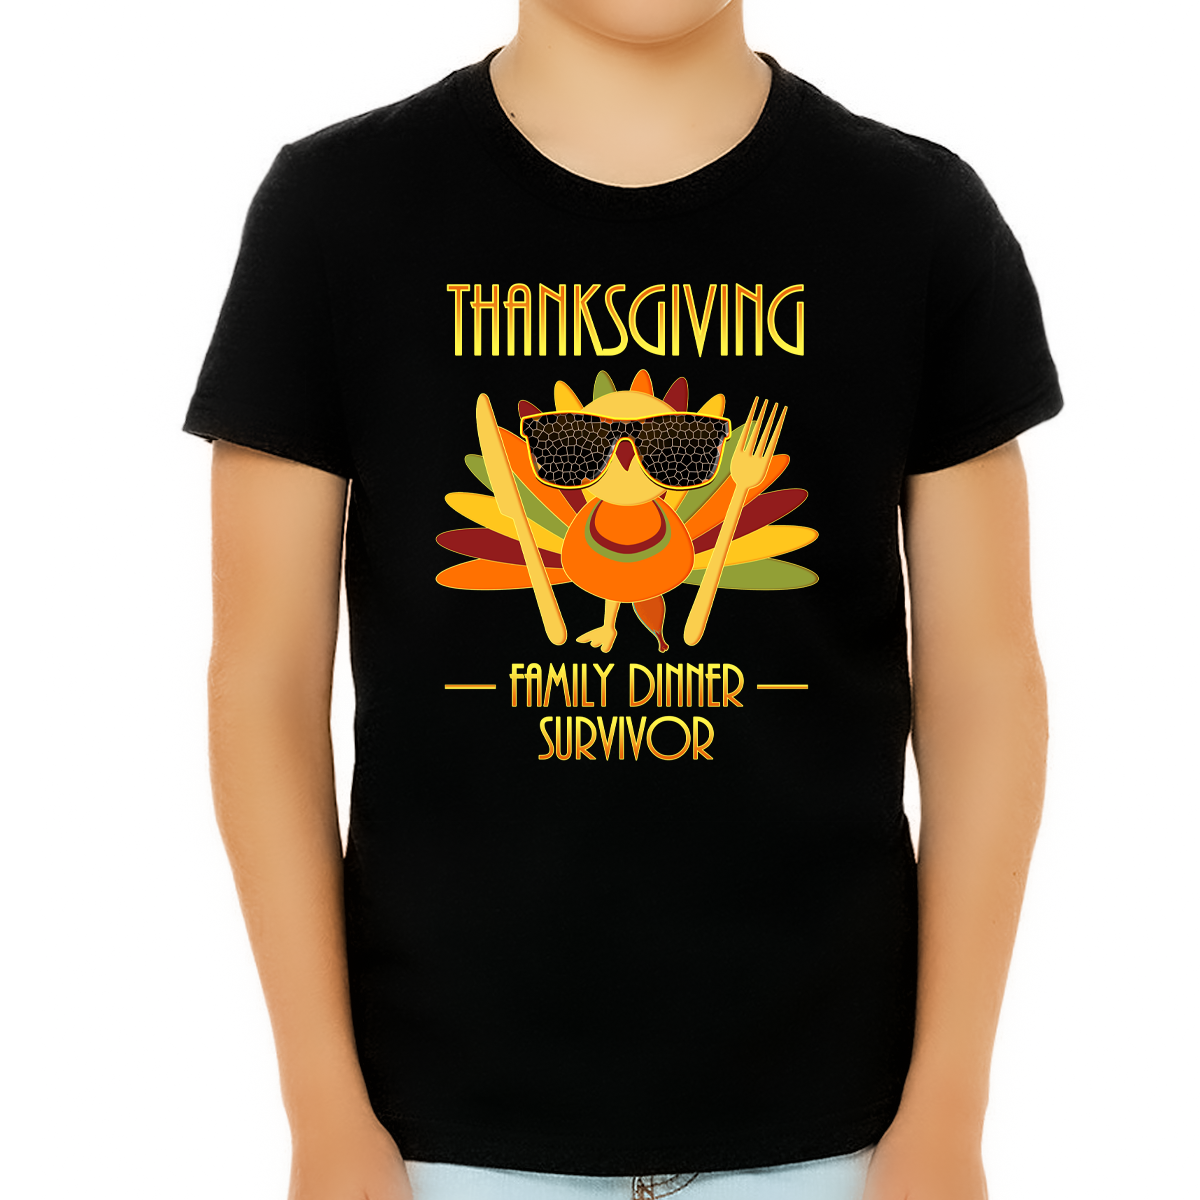 Thanksgiving Shirts for Boys Fall Shirts for Boys Turkey Shirt Kids Turkey Shirts Thanksgiving Tops